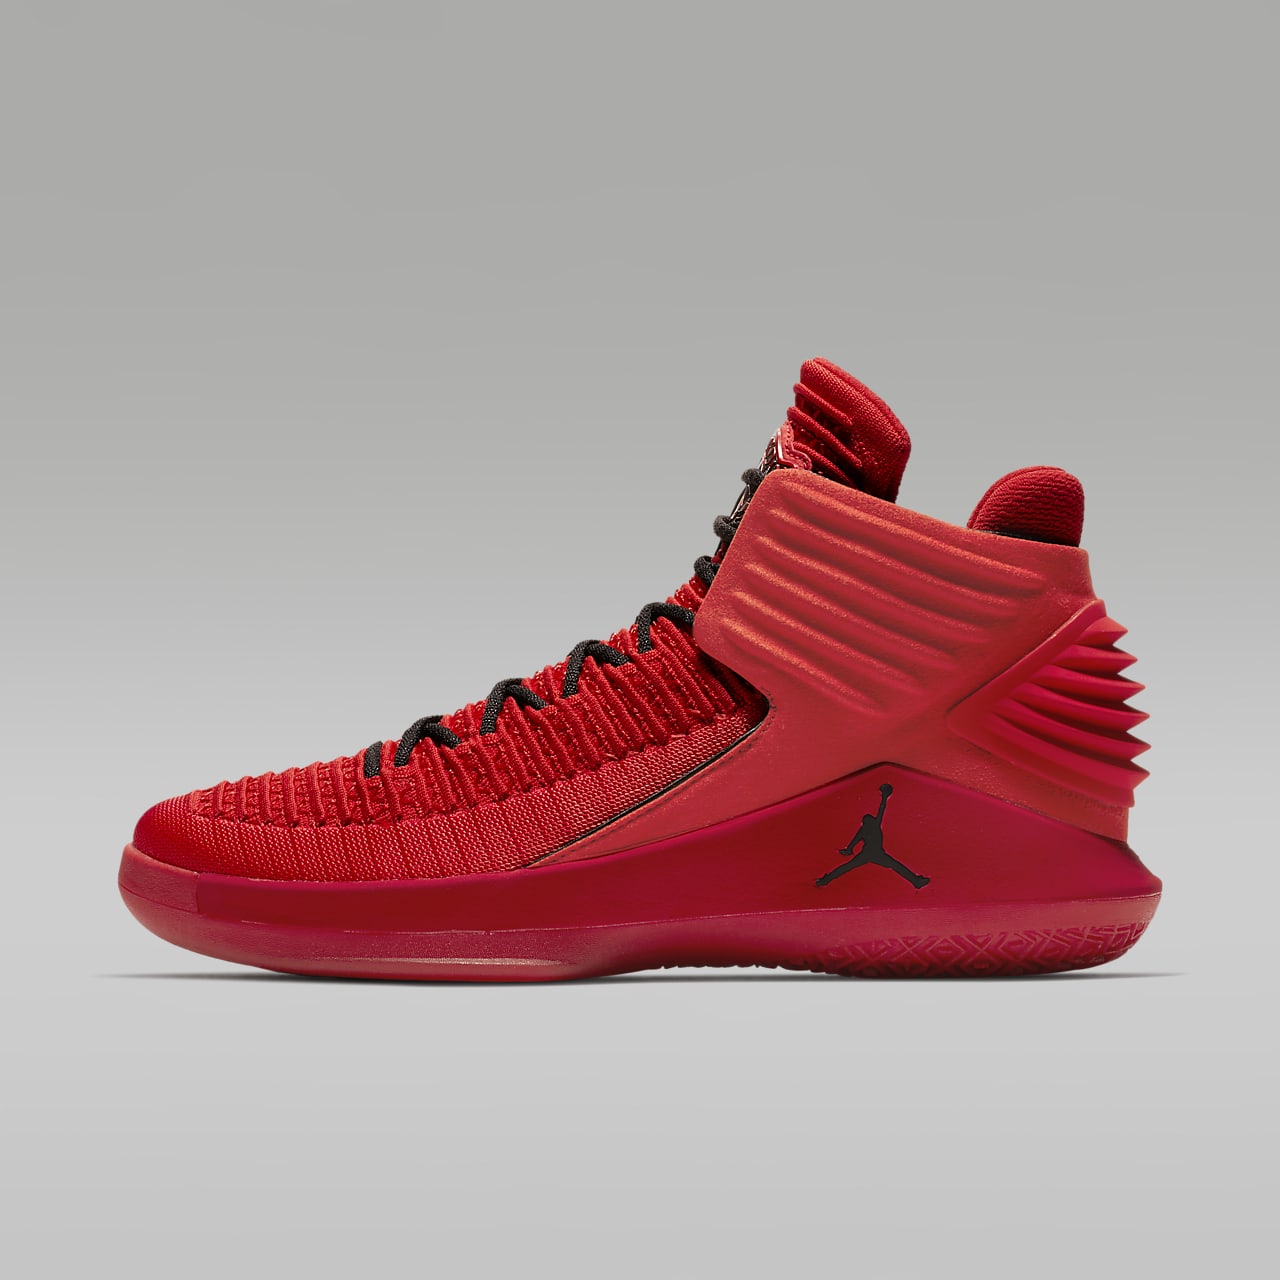 Air Jordan XXXII "Rosso Corsa" Men's Basketball Shoe